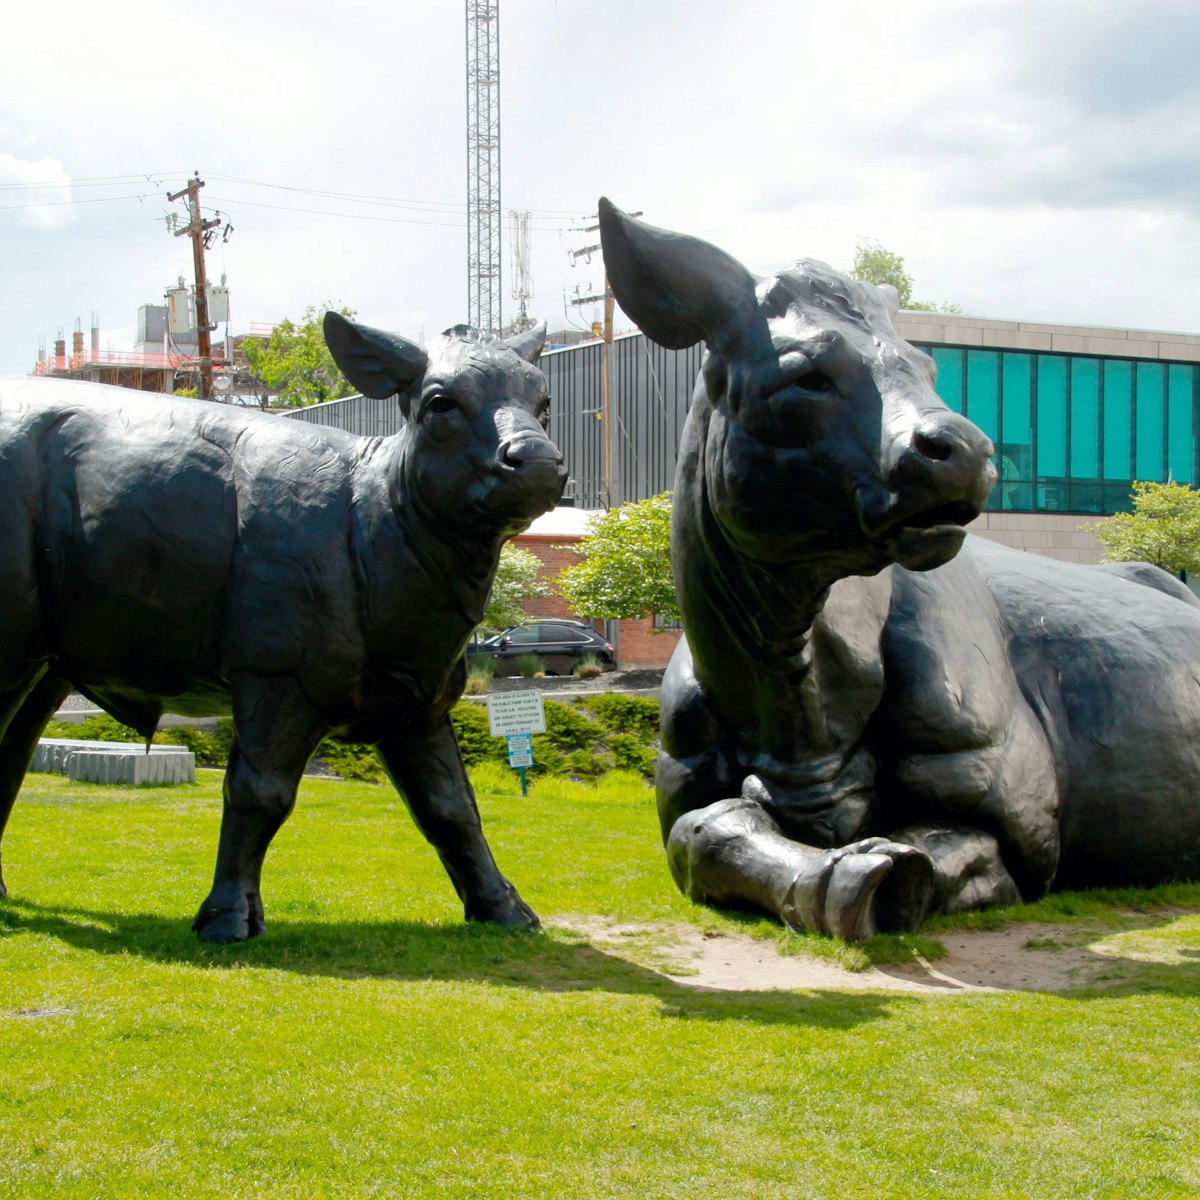 Scottish Angus Cow & Calf sculpture in Denver.